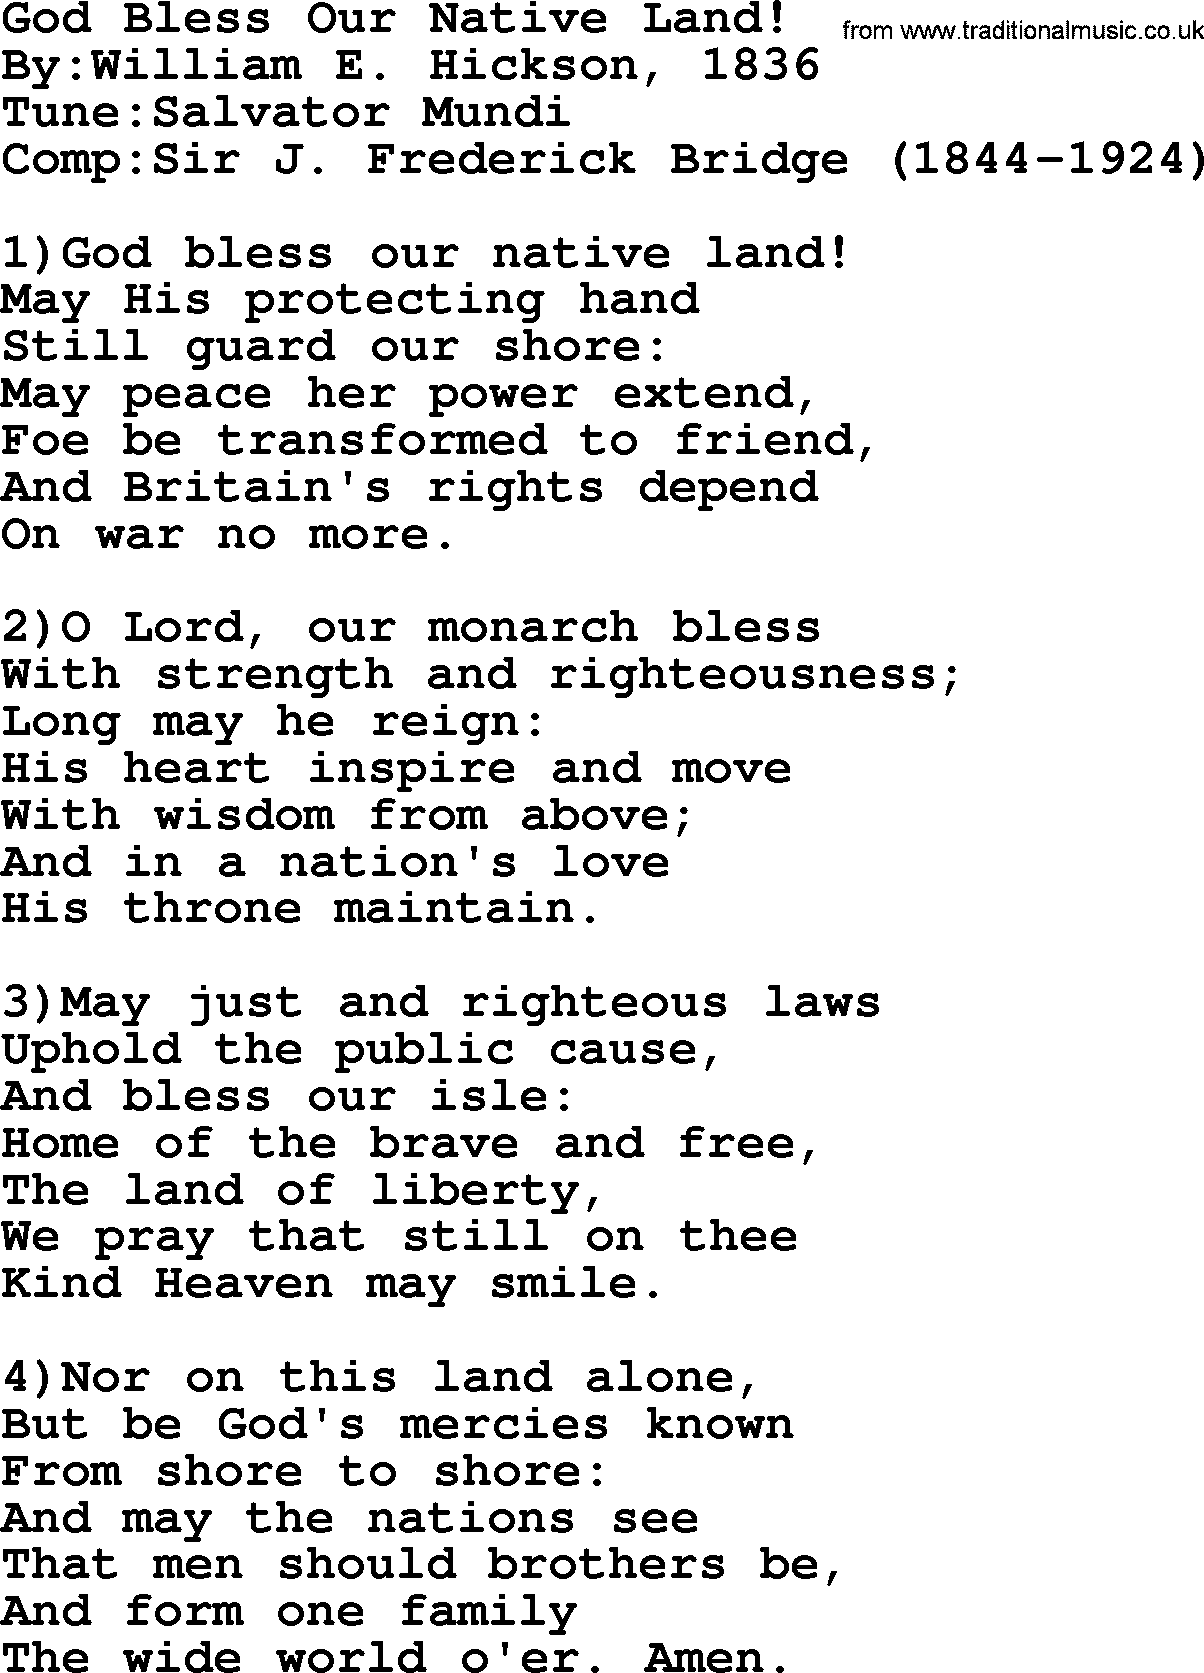 Methodist Hymn: God Bless Our Native Land!, lyrics